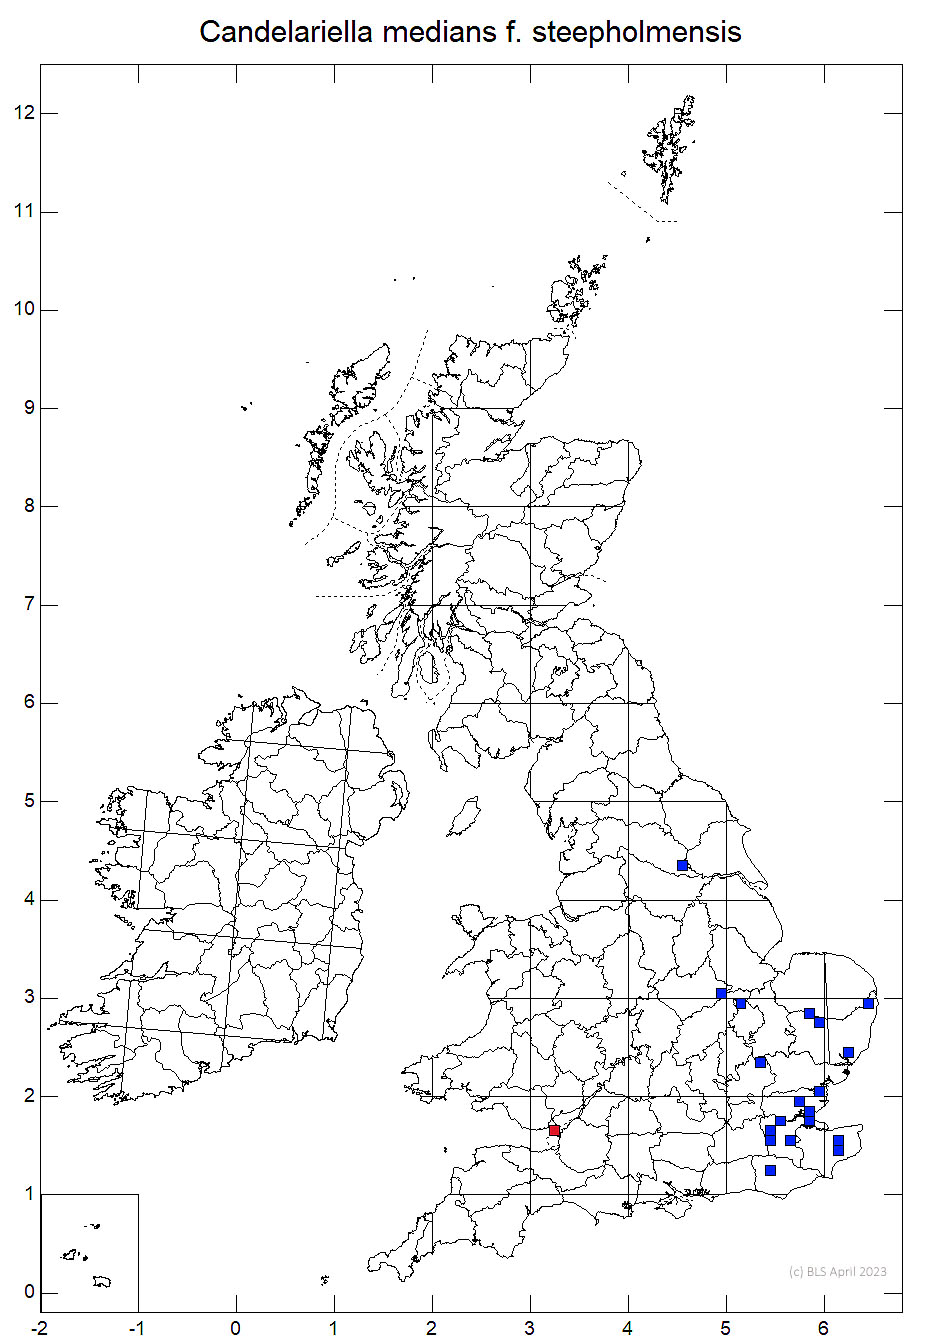 Candelariella medians f. steepholmensis 10km sq distribution map